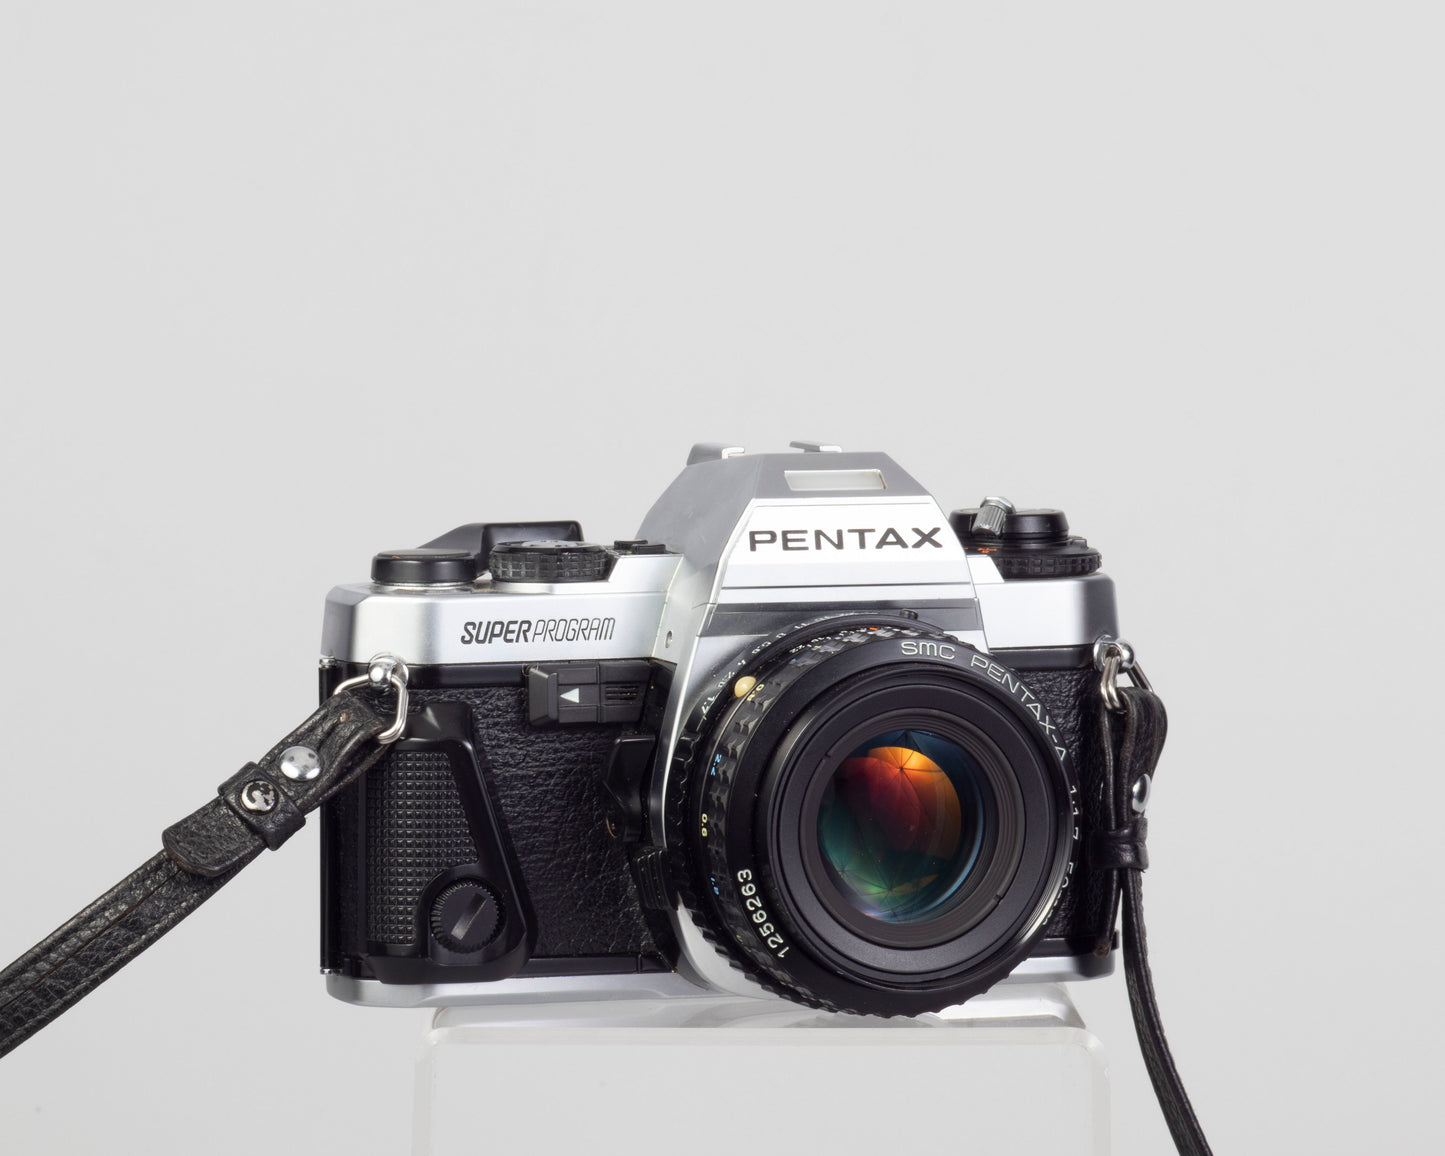 Reflex Pentax Super Program 35 mm avec objectif SMC Pentax A 50 mm f1.7 + ME Winder II + manuel d'origine